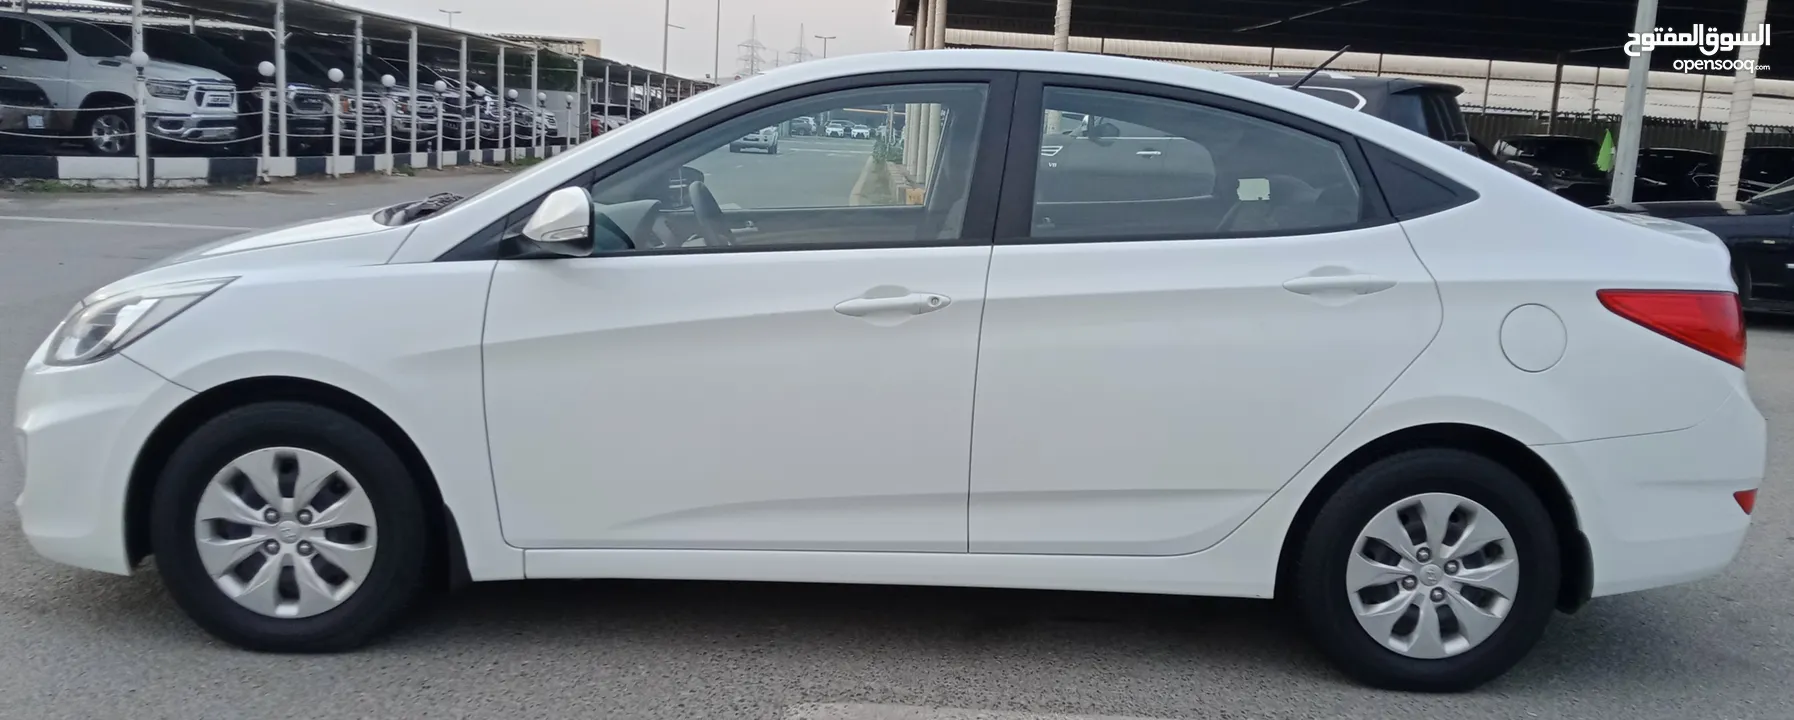 Hyundai Accent Full Auto V4 1.6L Model 2016